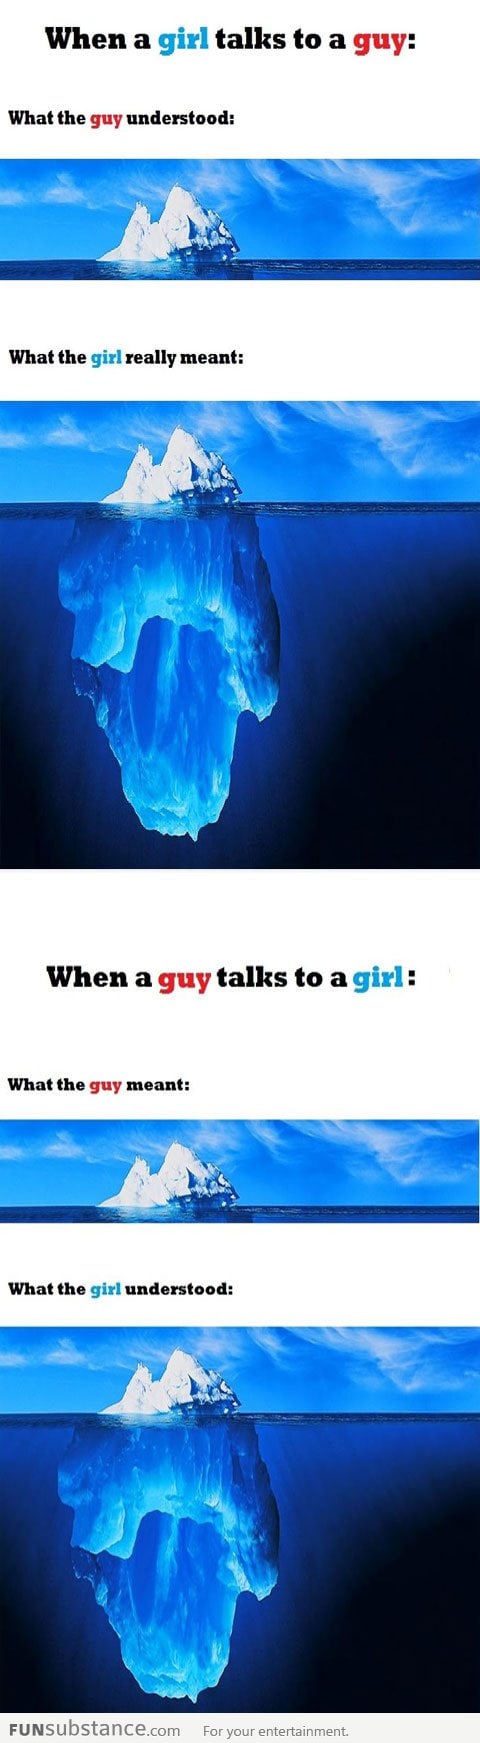 Communication differences: Guy vs girls